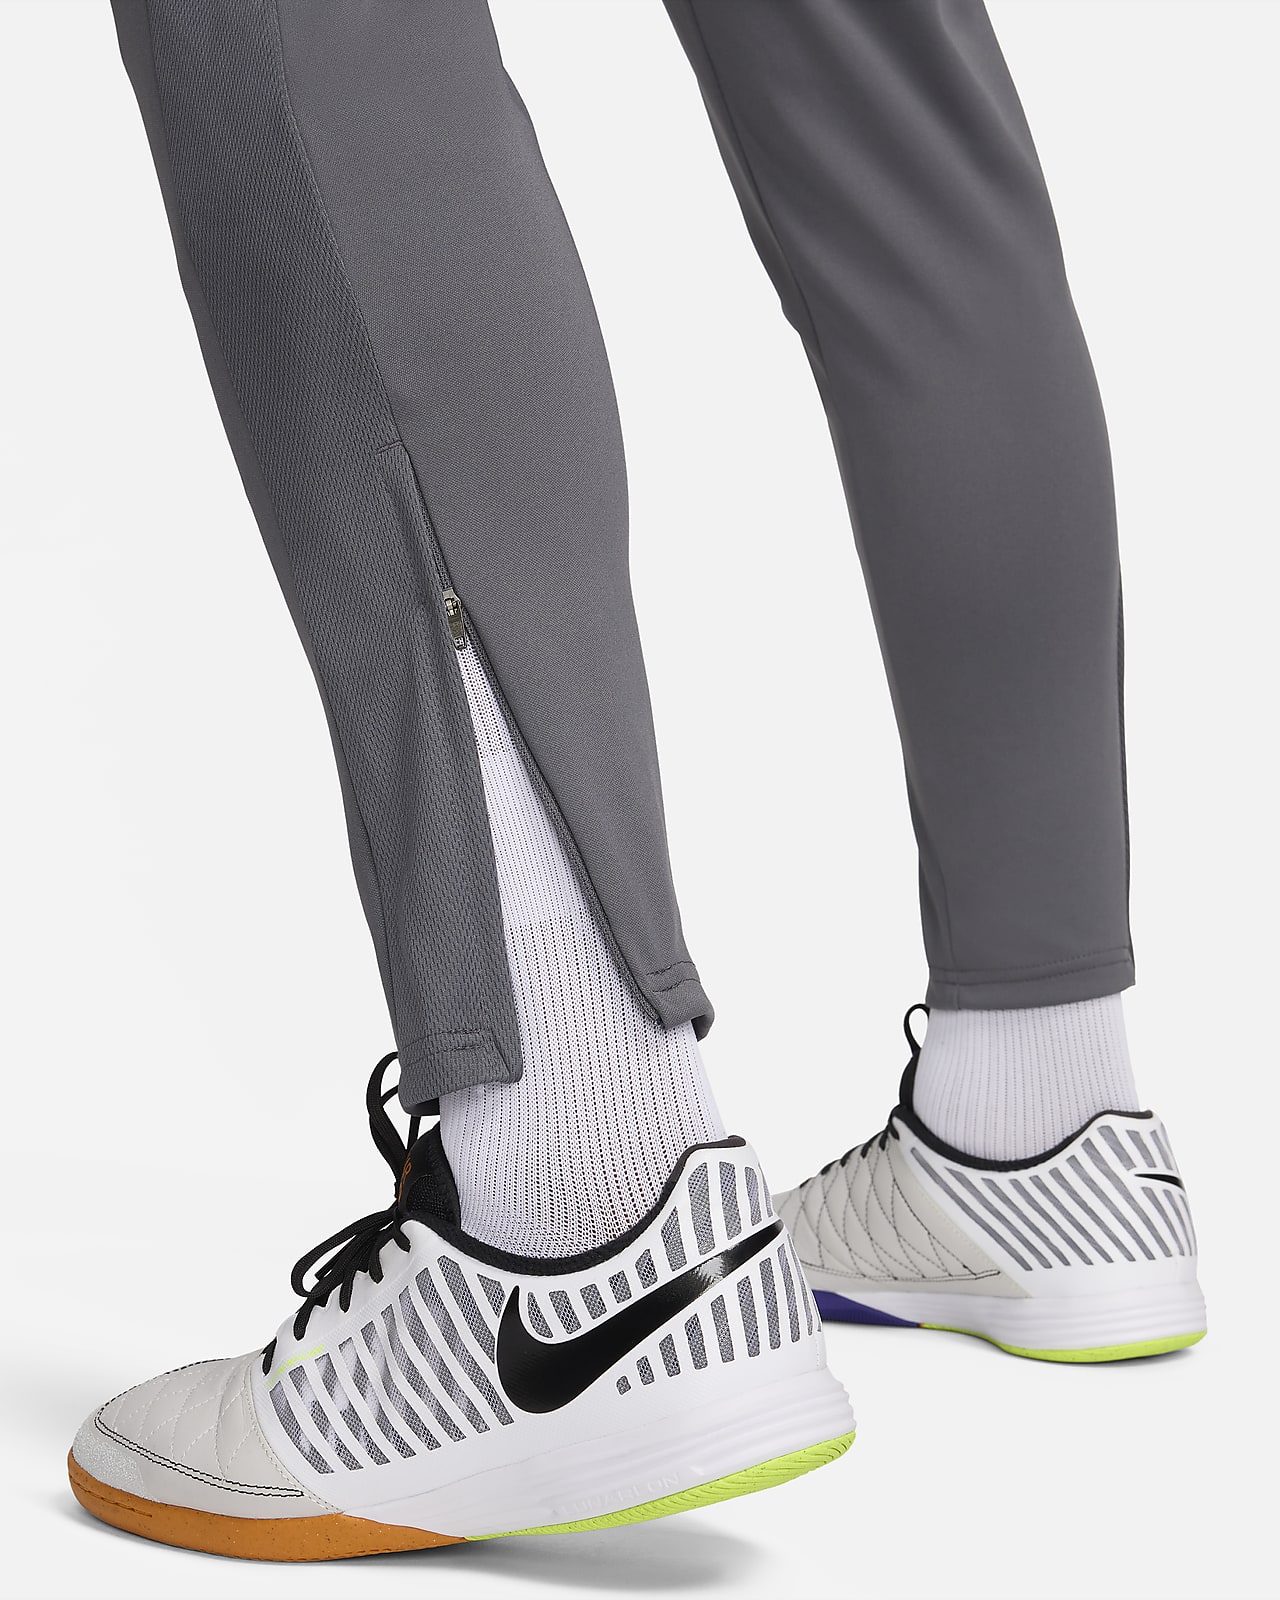 Nike Men's Academy Soccer Pants